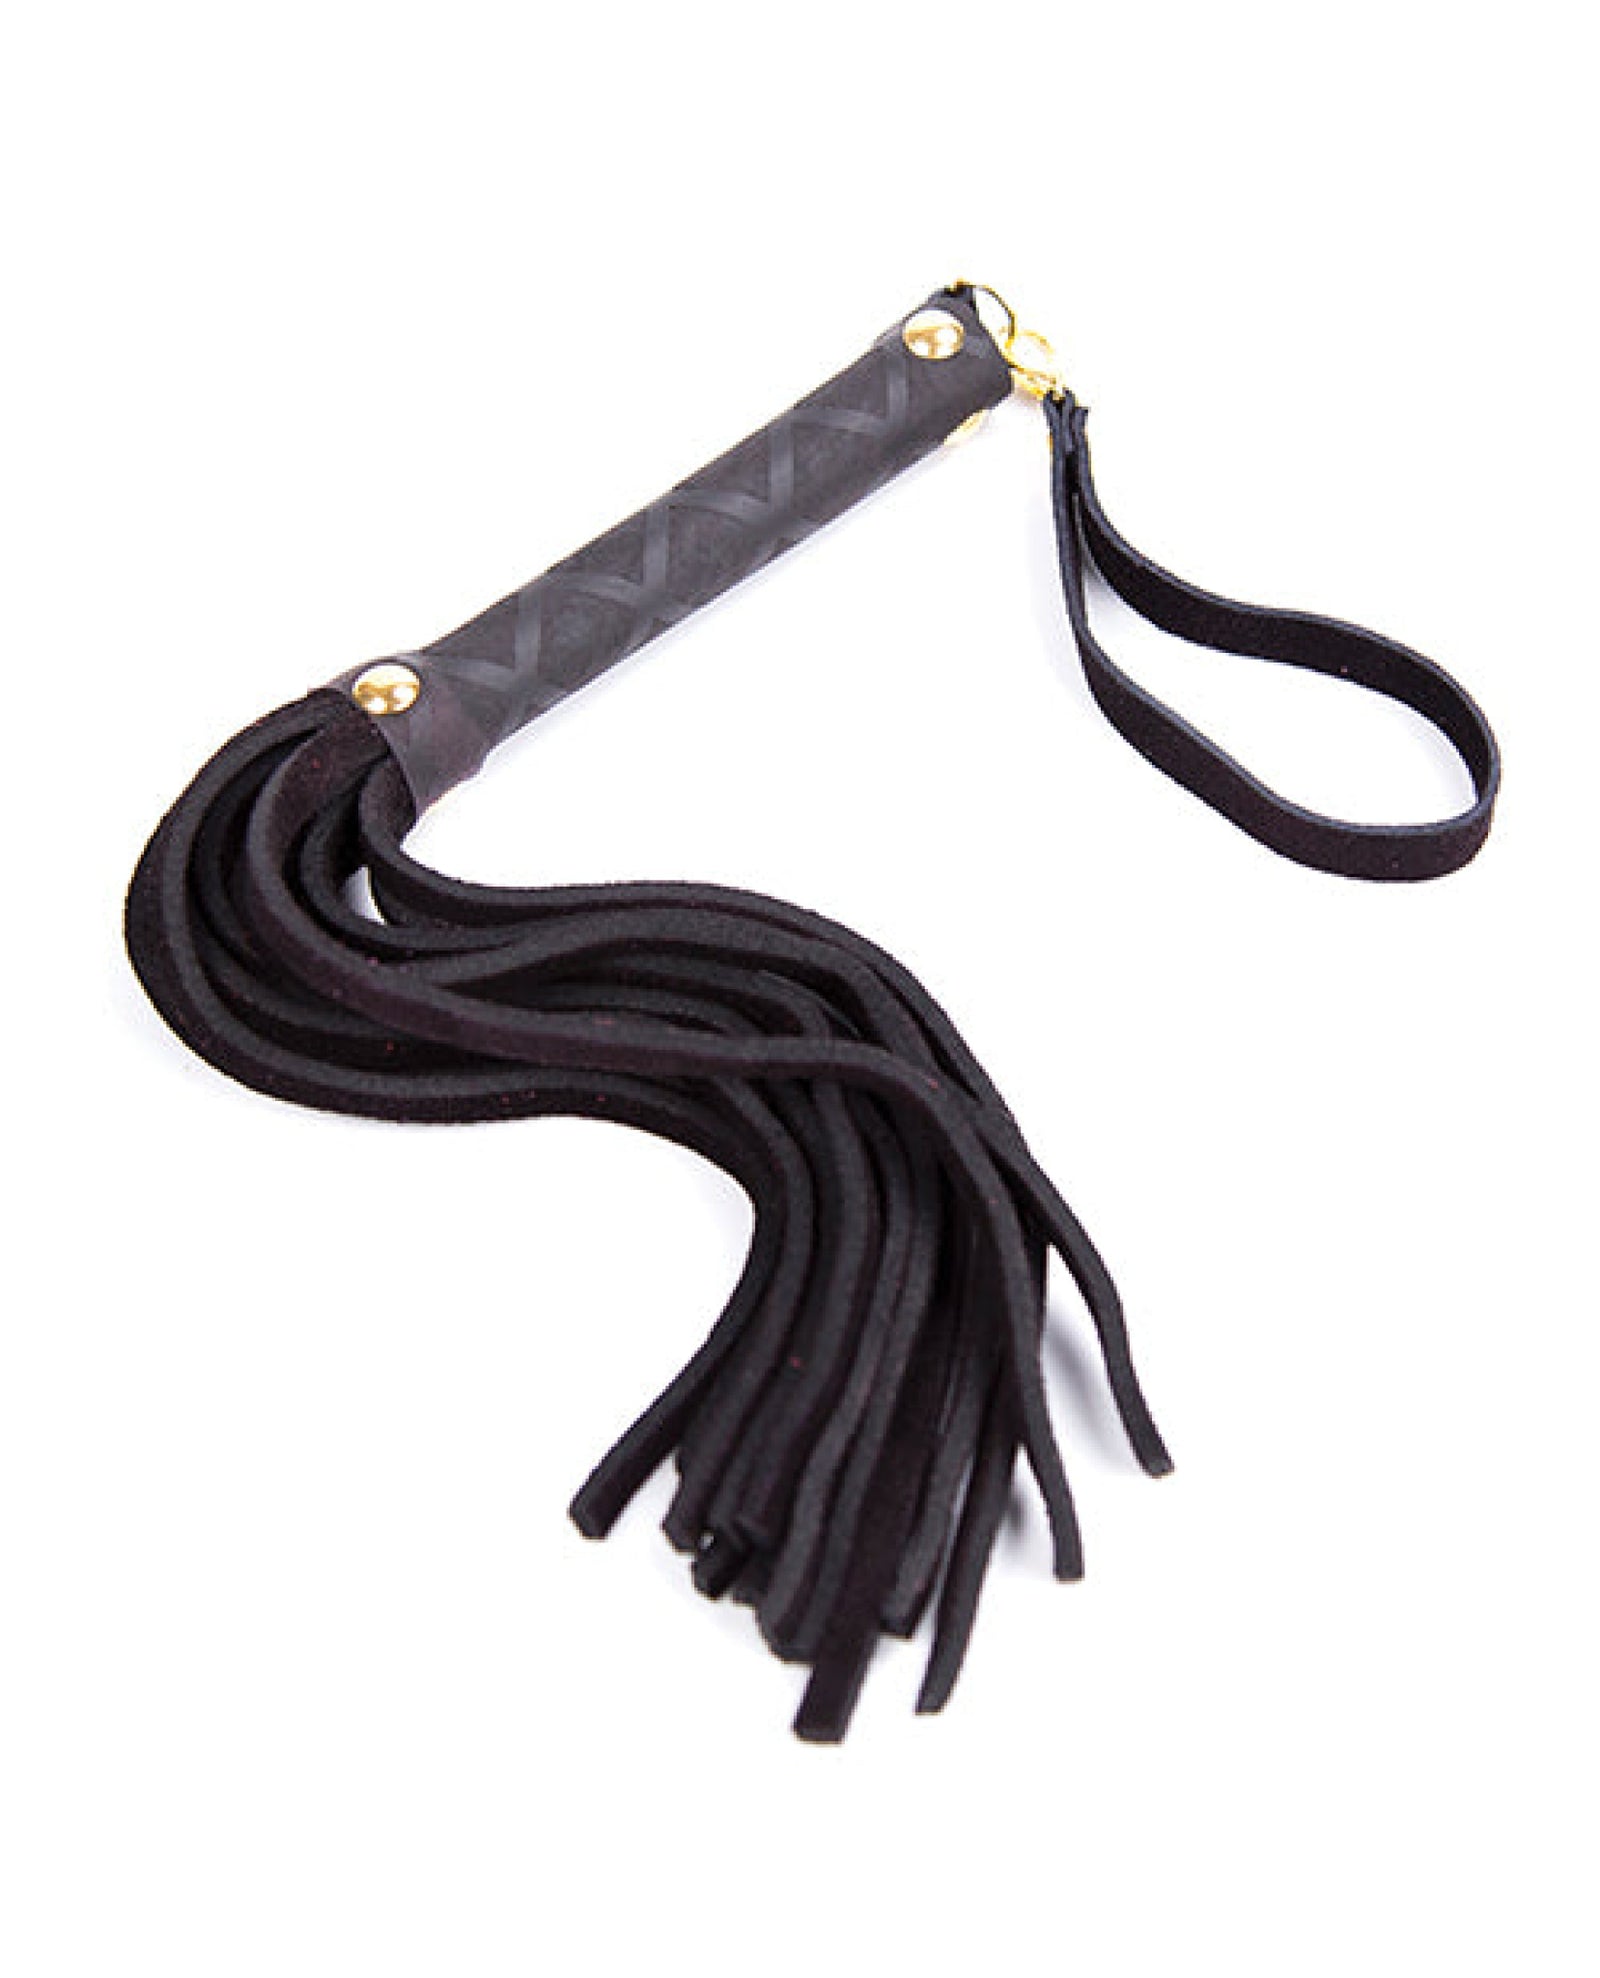 Plesur Mini Leather Flogger - Black Plesur